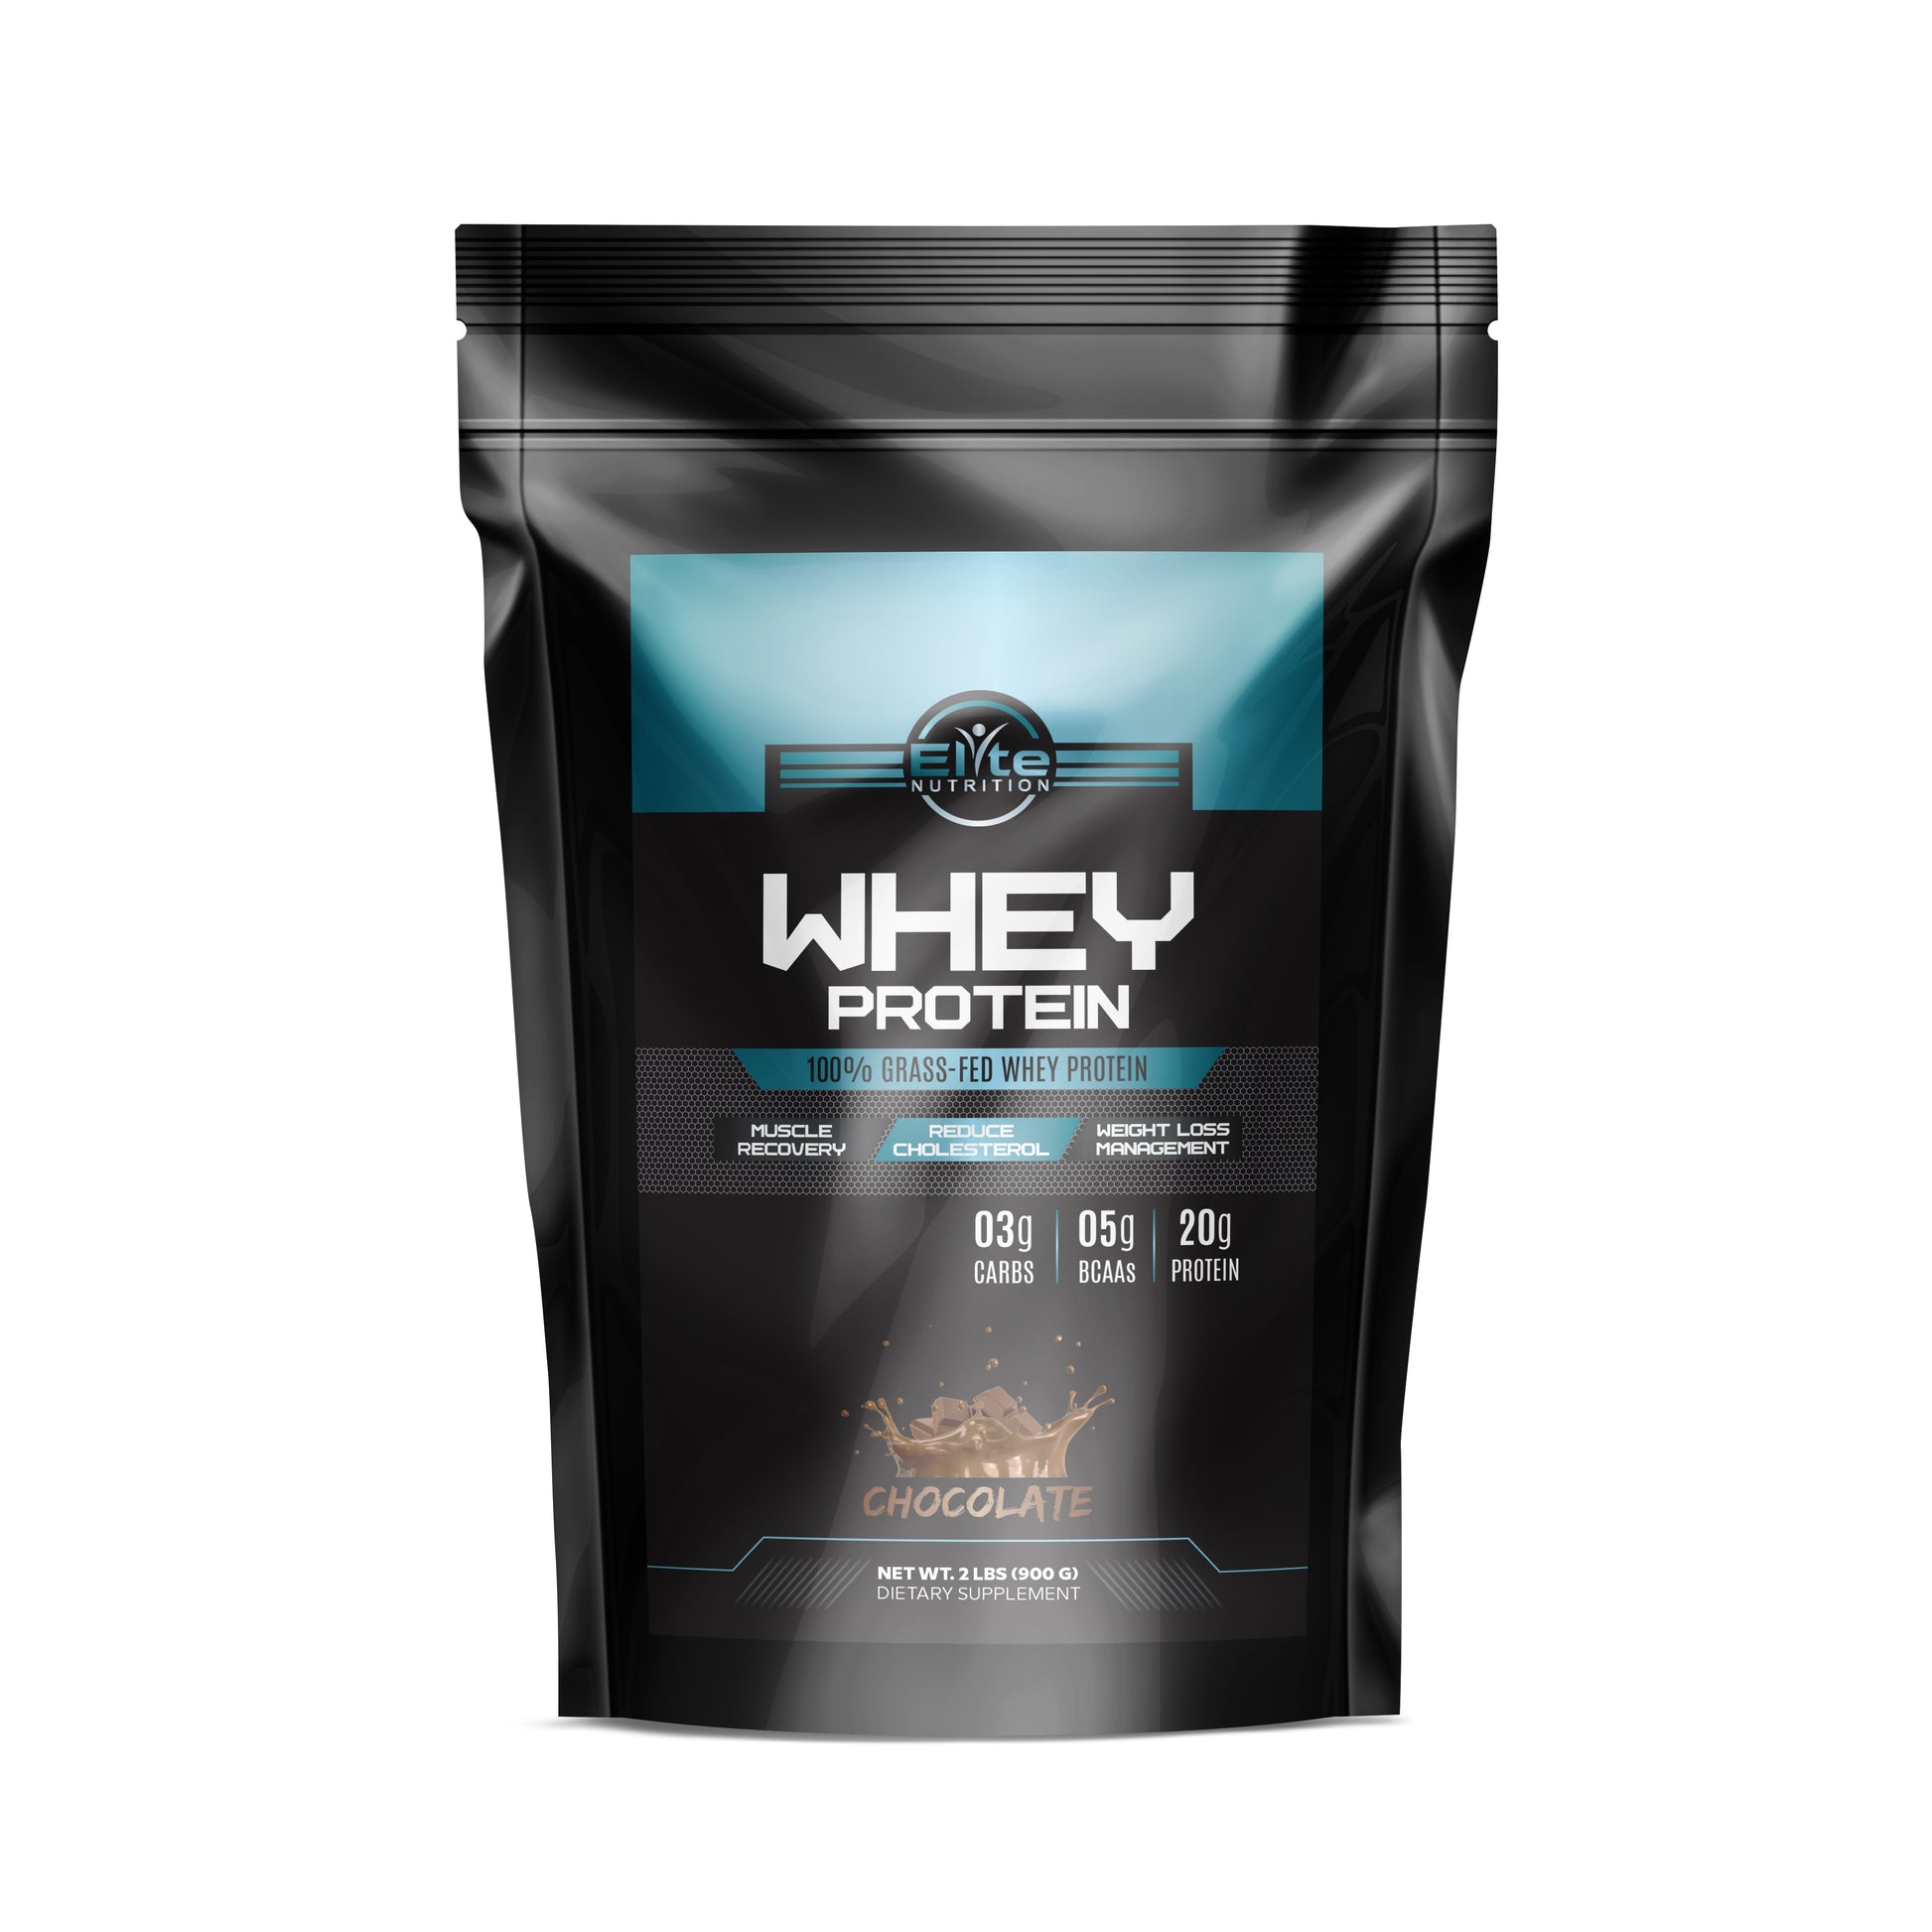 Grass-Fed Whey Protein, Whey Protein Powder